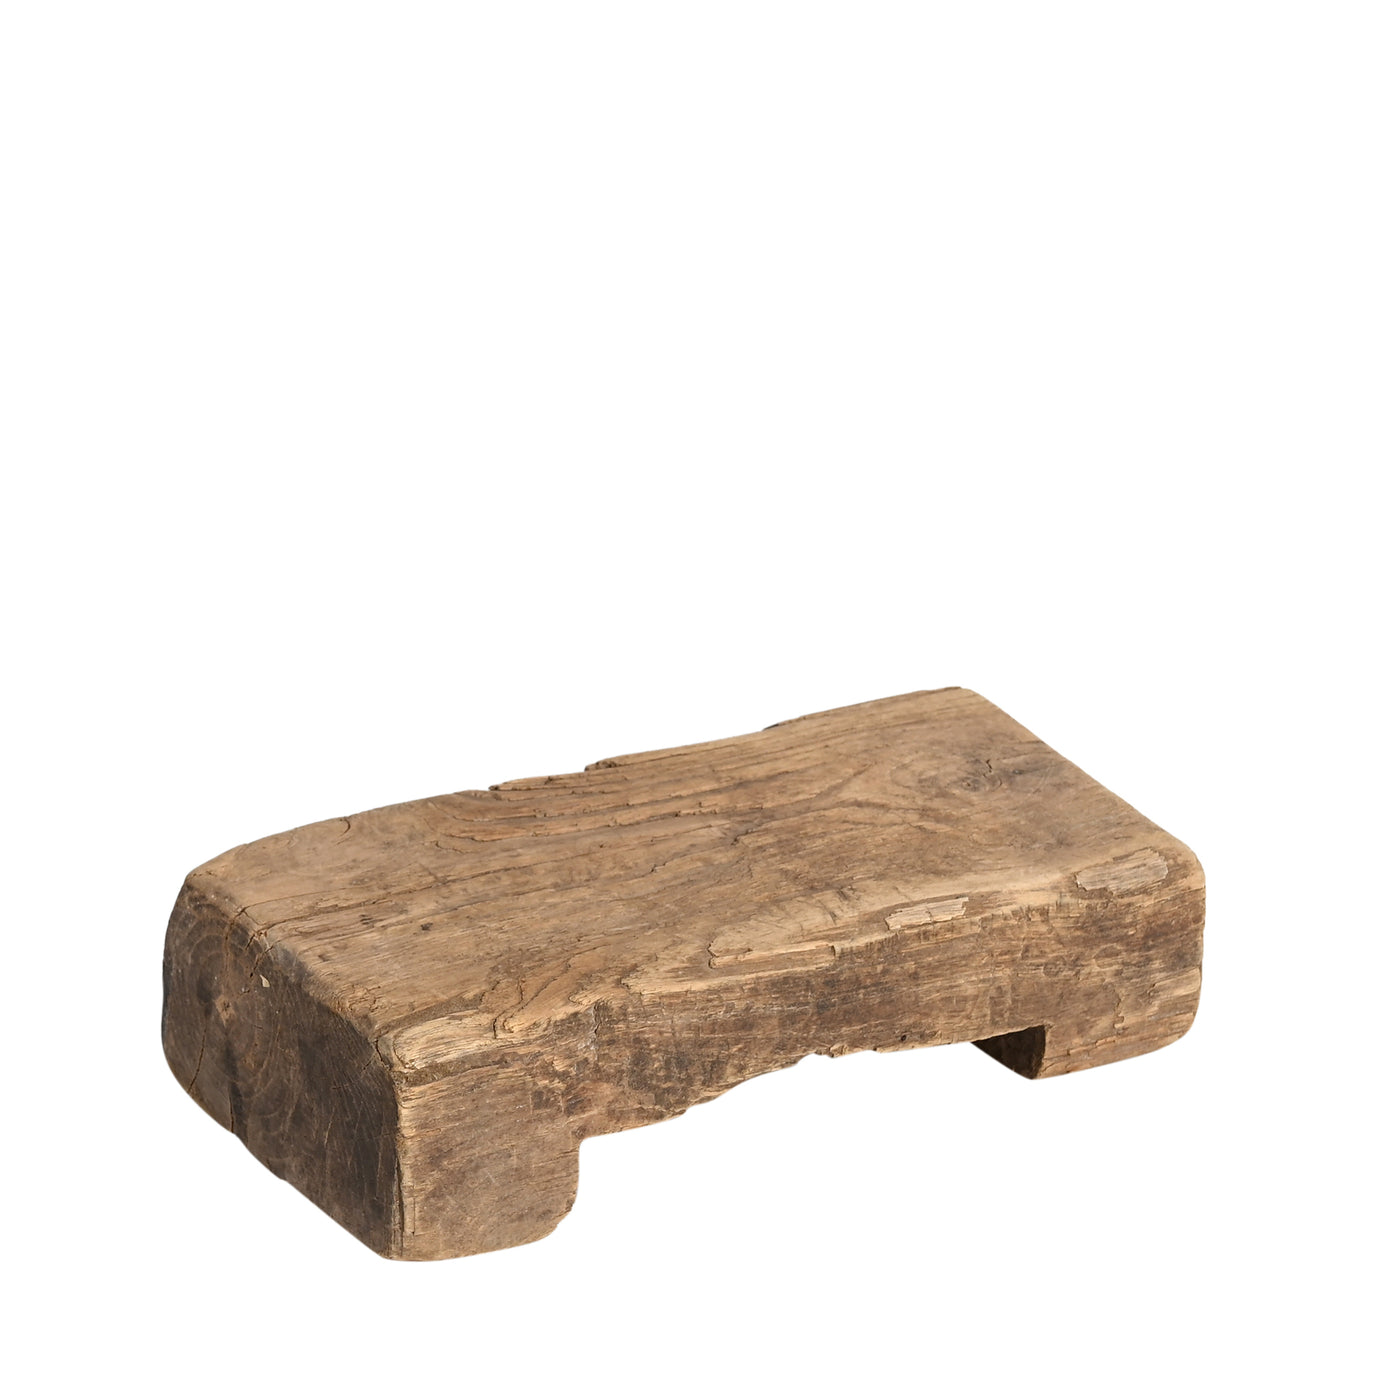 Pakana - Wooden board n ° 6